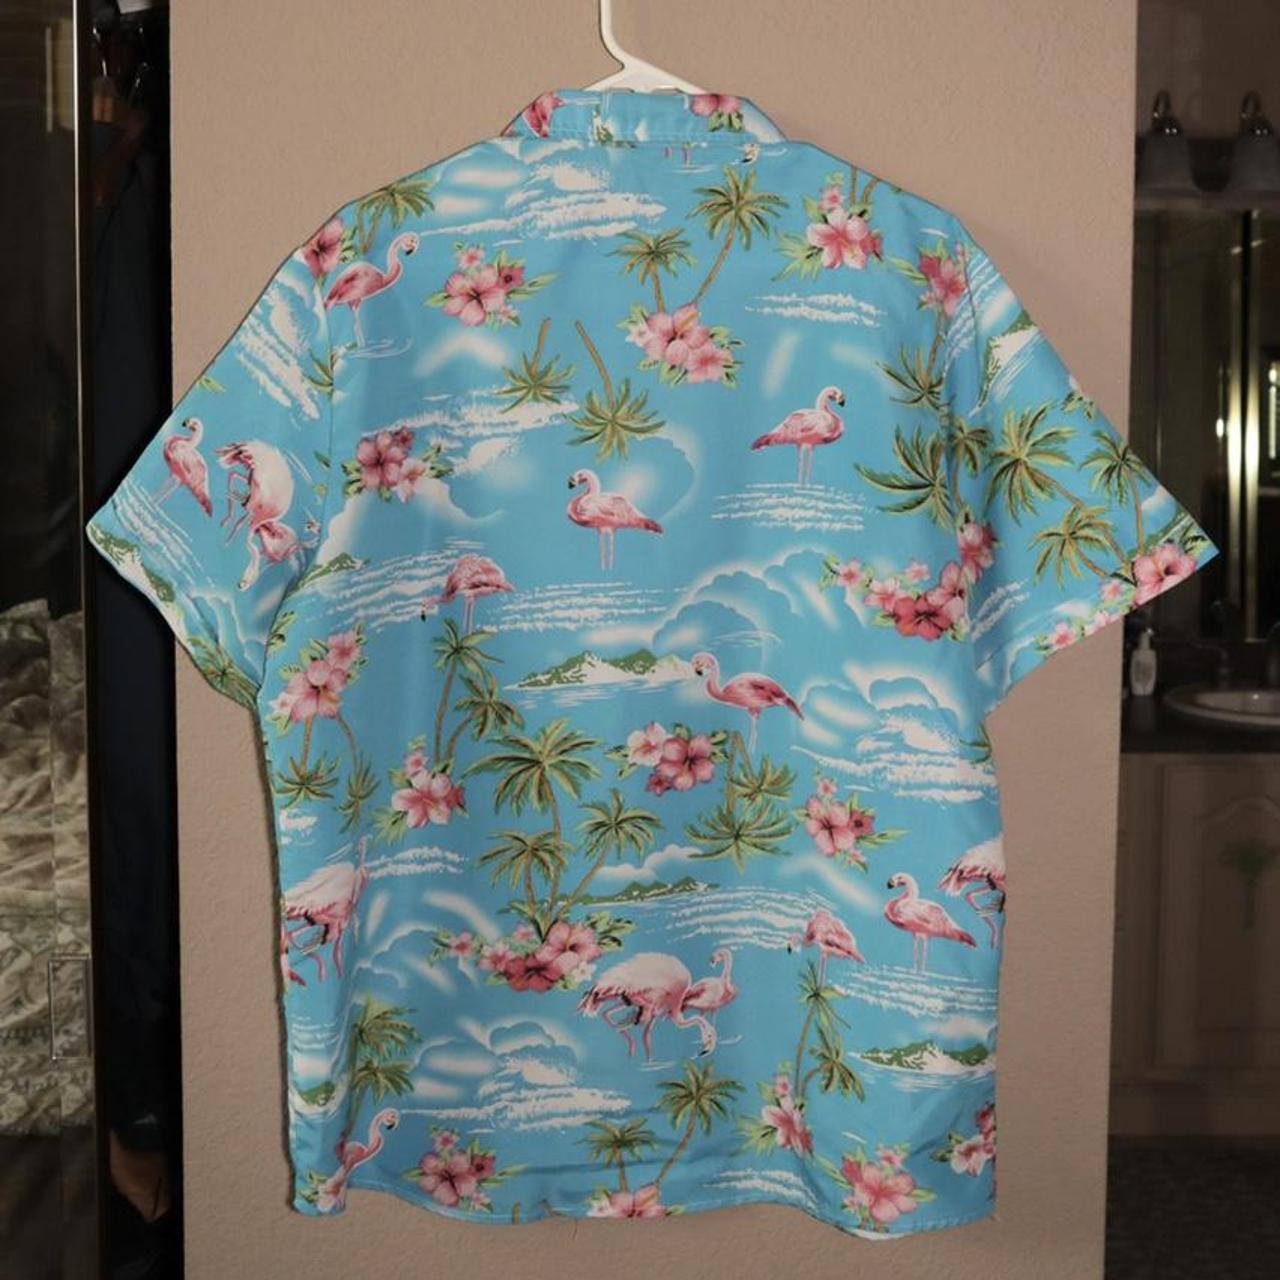 Product Image 2 - Flamingo/Palm Tree button up shirt